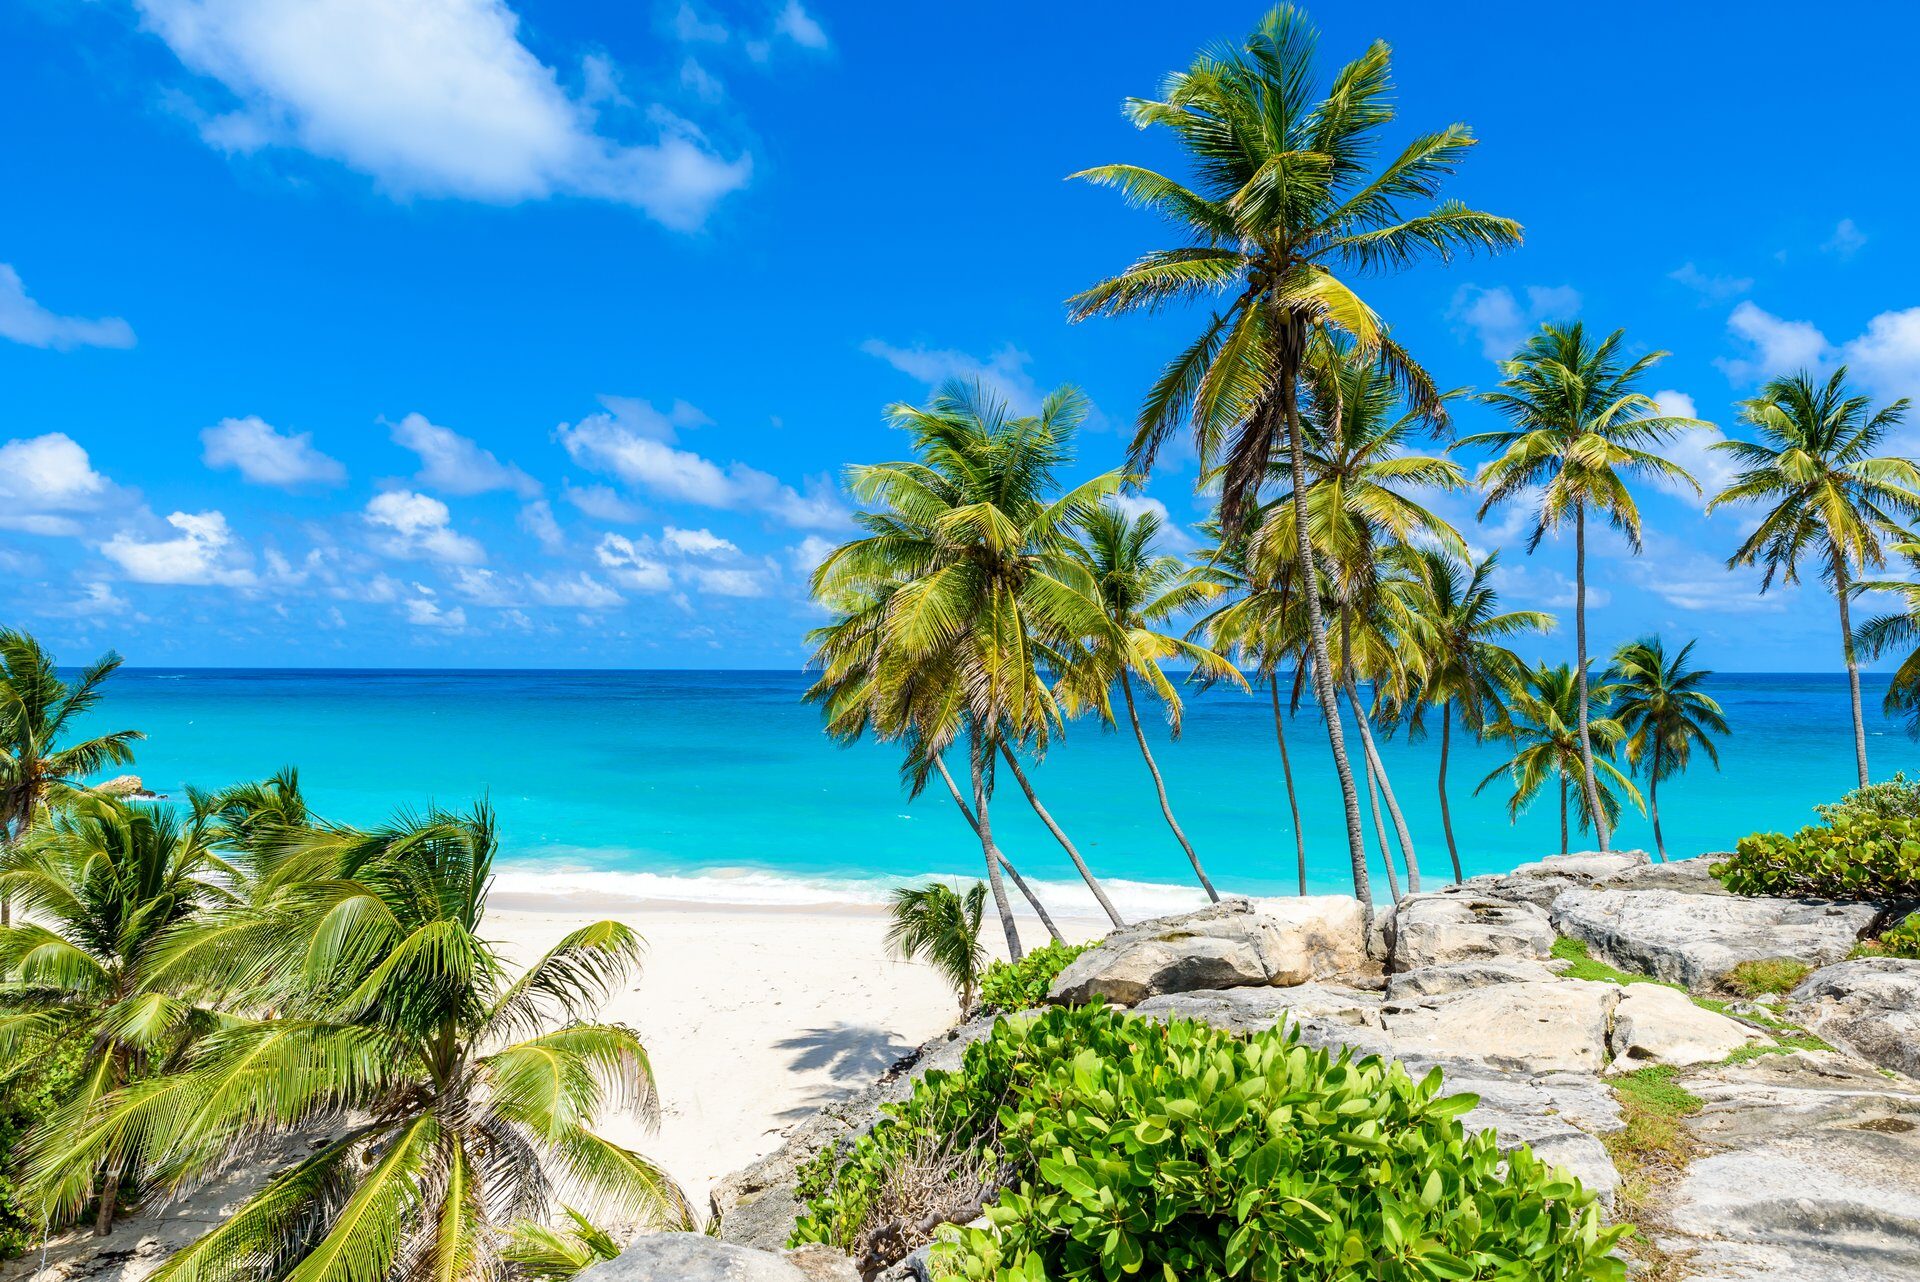 14 Best Beaches In Barbados Celebrity Cruises